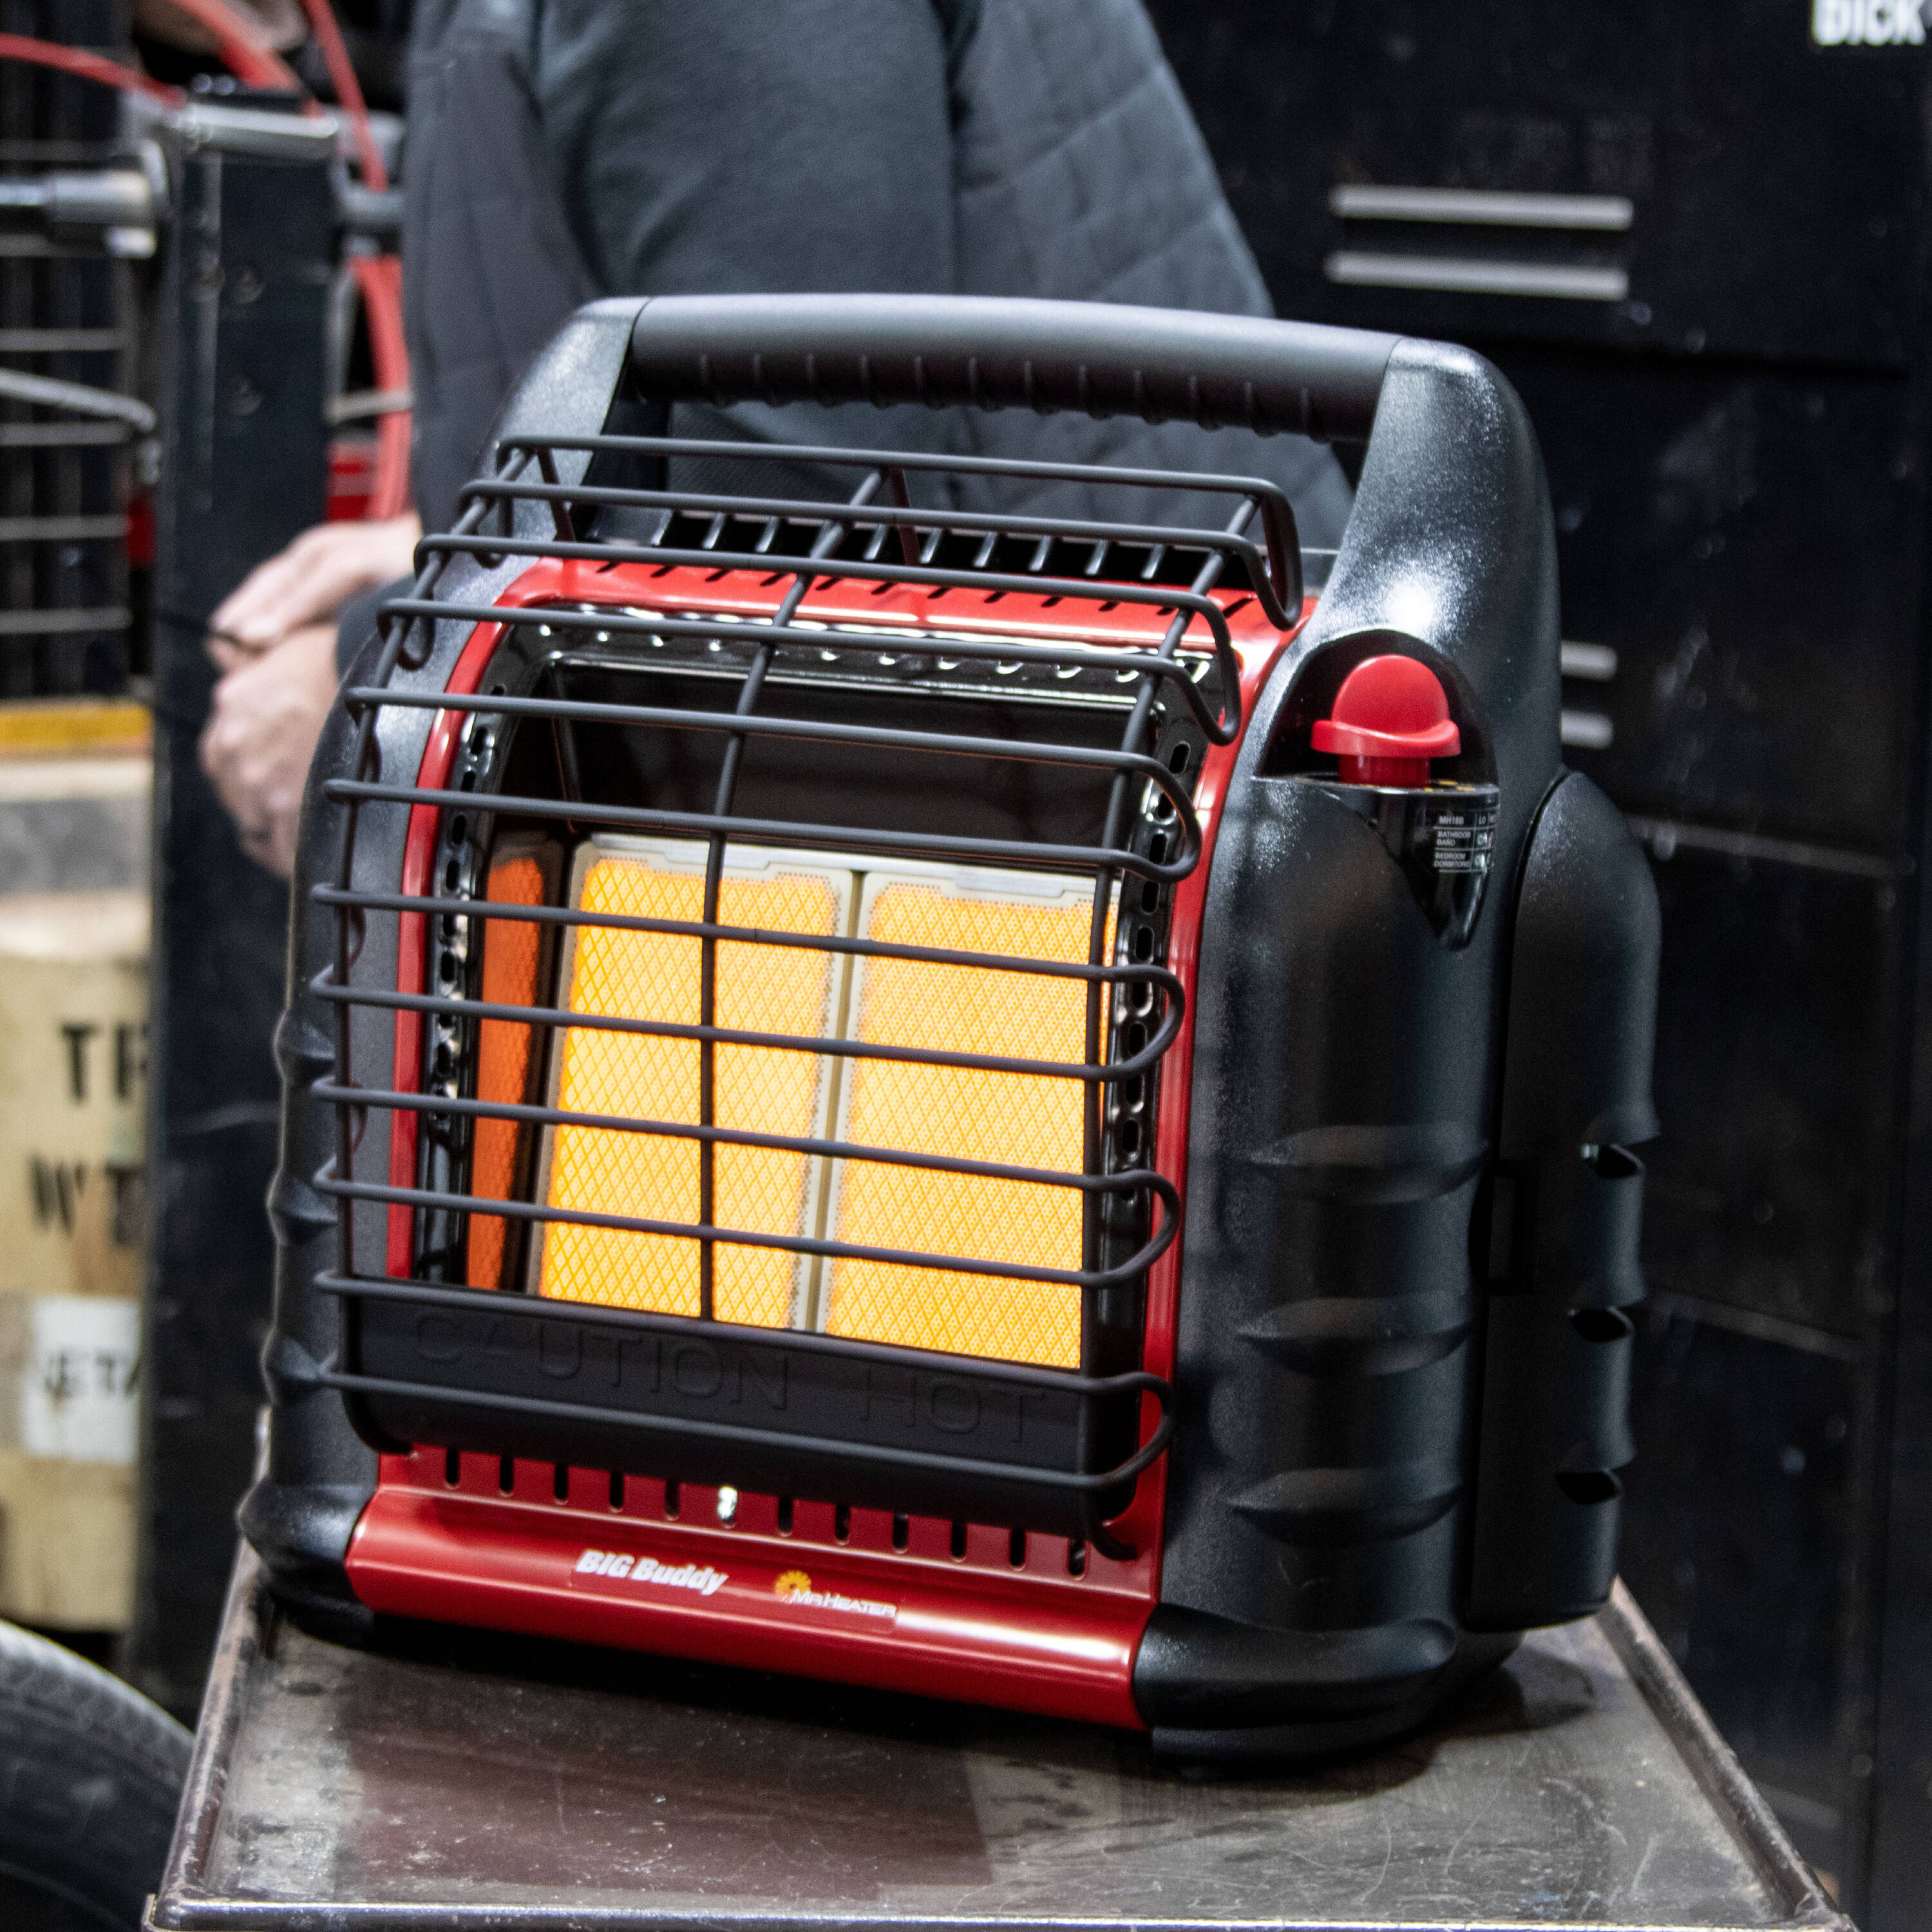 Heat Hog vs. Mr. Heater - Portable Propane Heaters